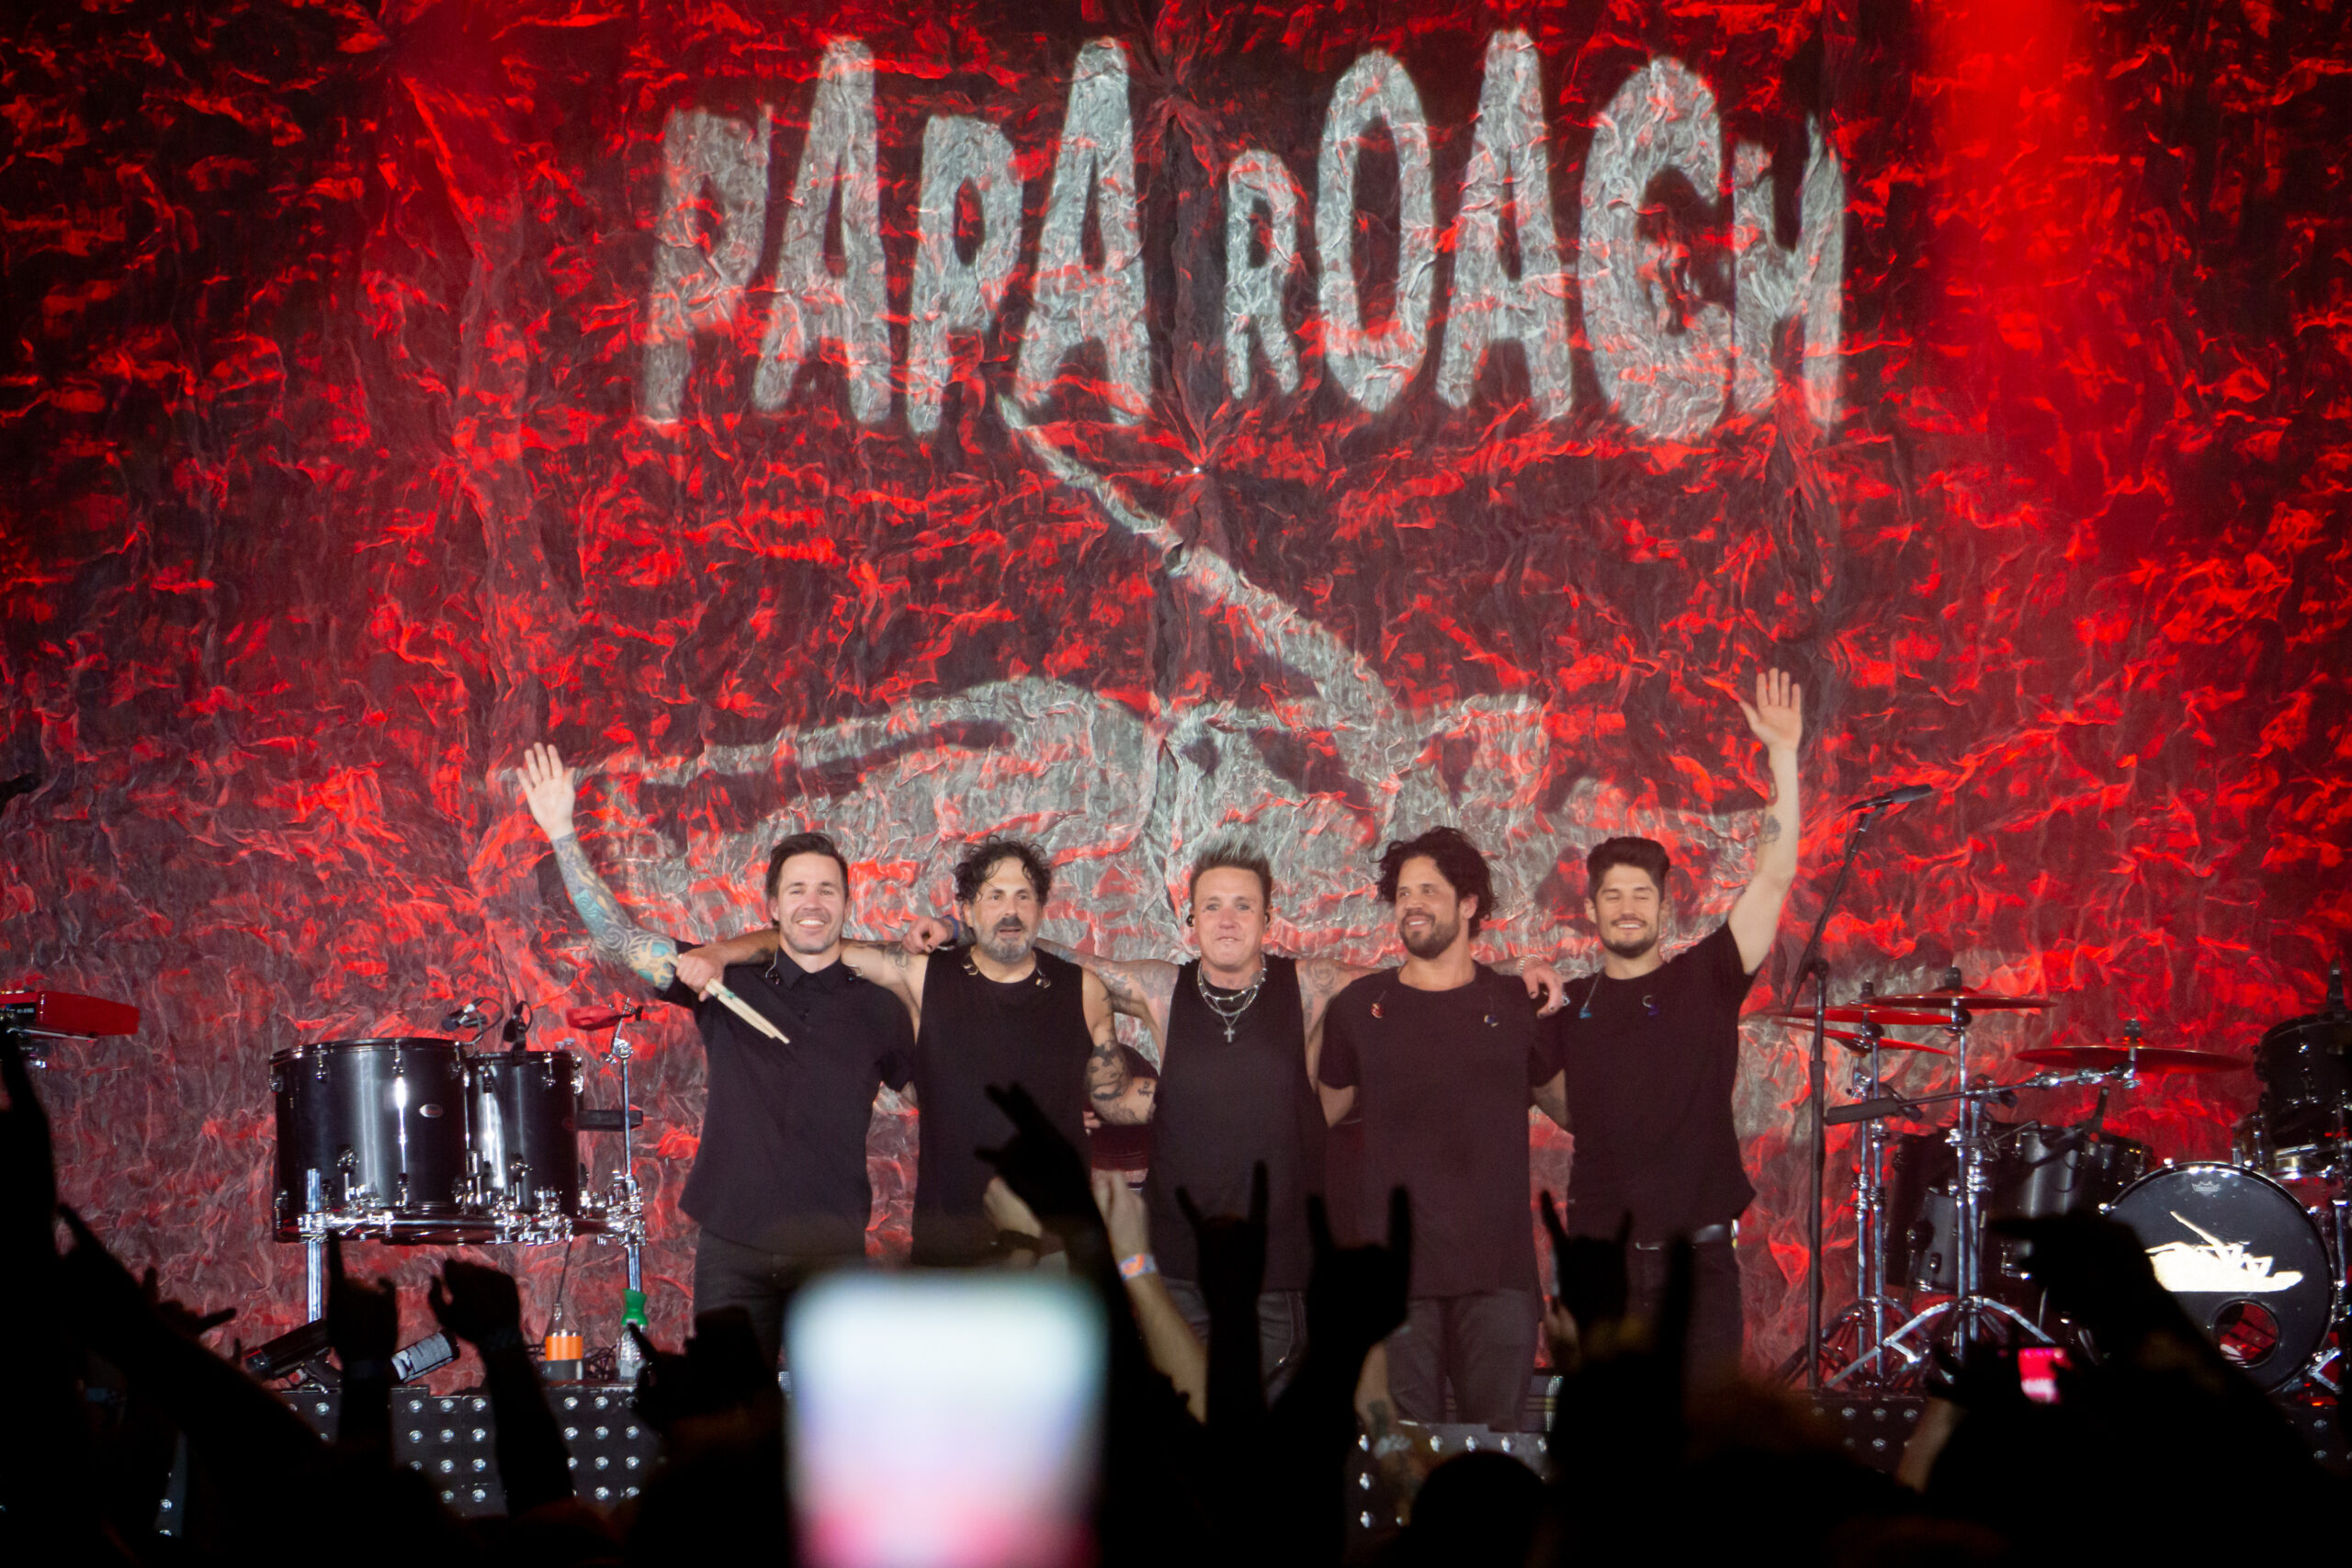 Papa Roach photo by Melody Staton for HM Magazine